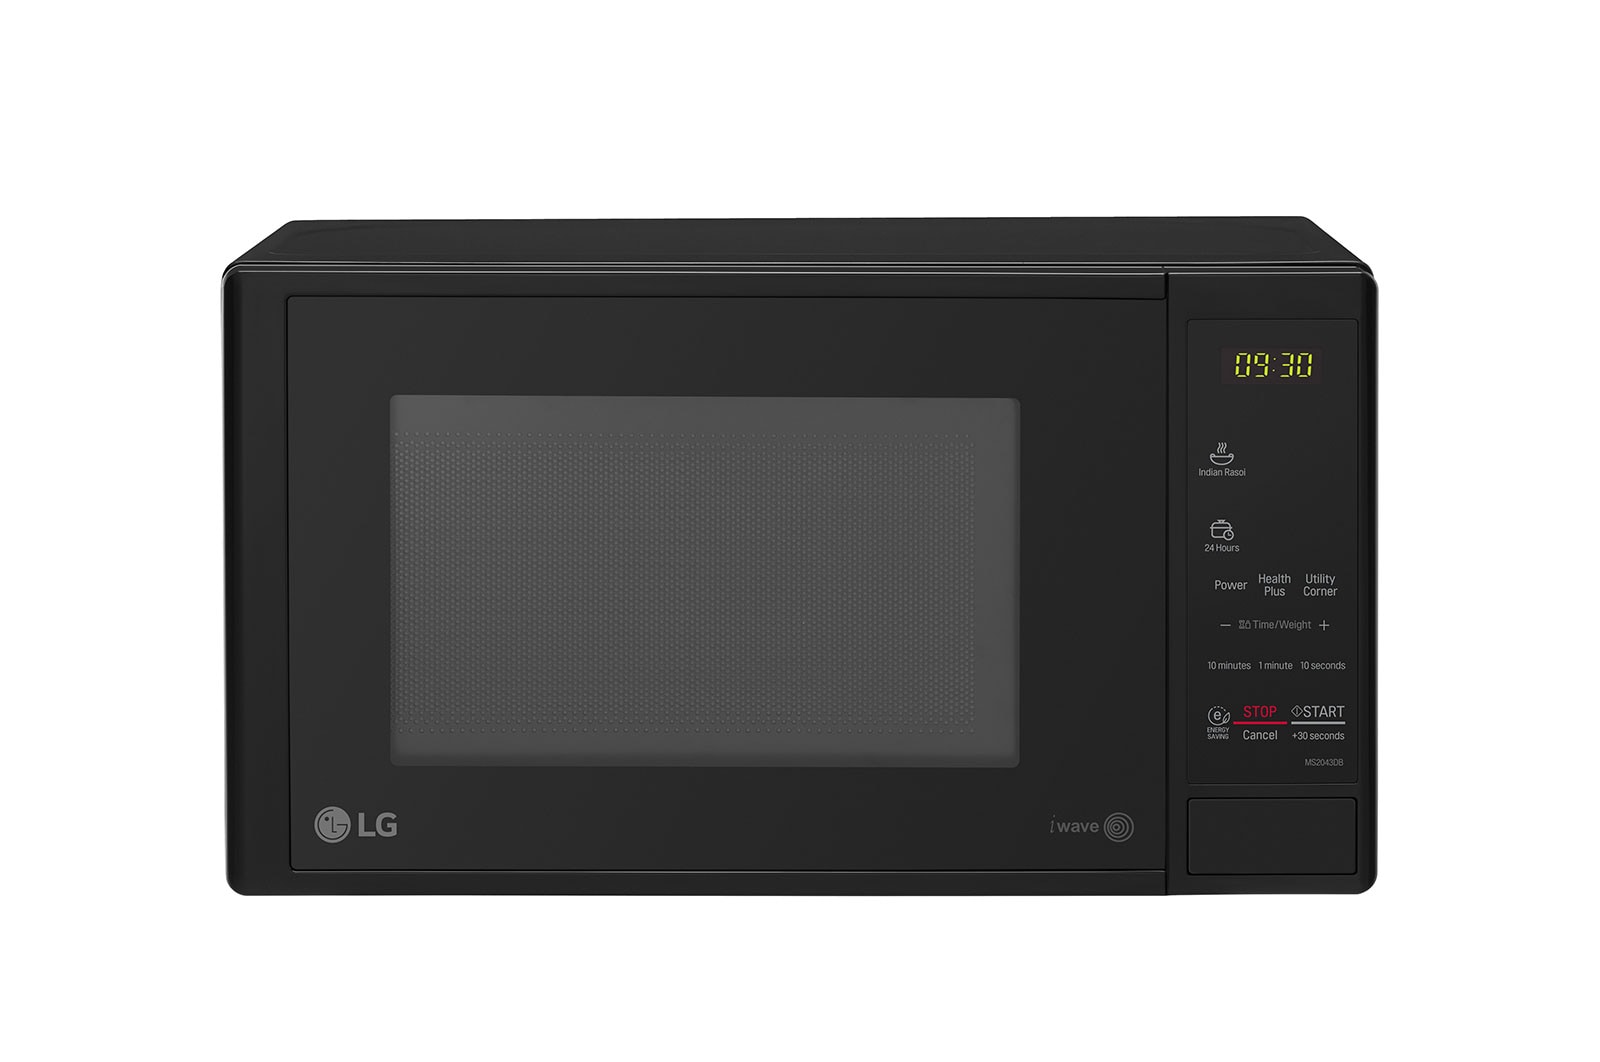 LG 20L Microwave | LG Electronics Sri Lanka